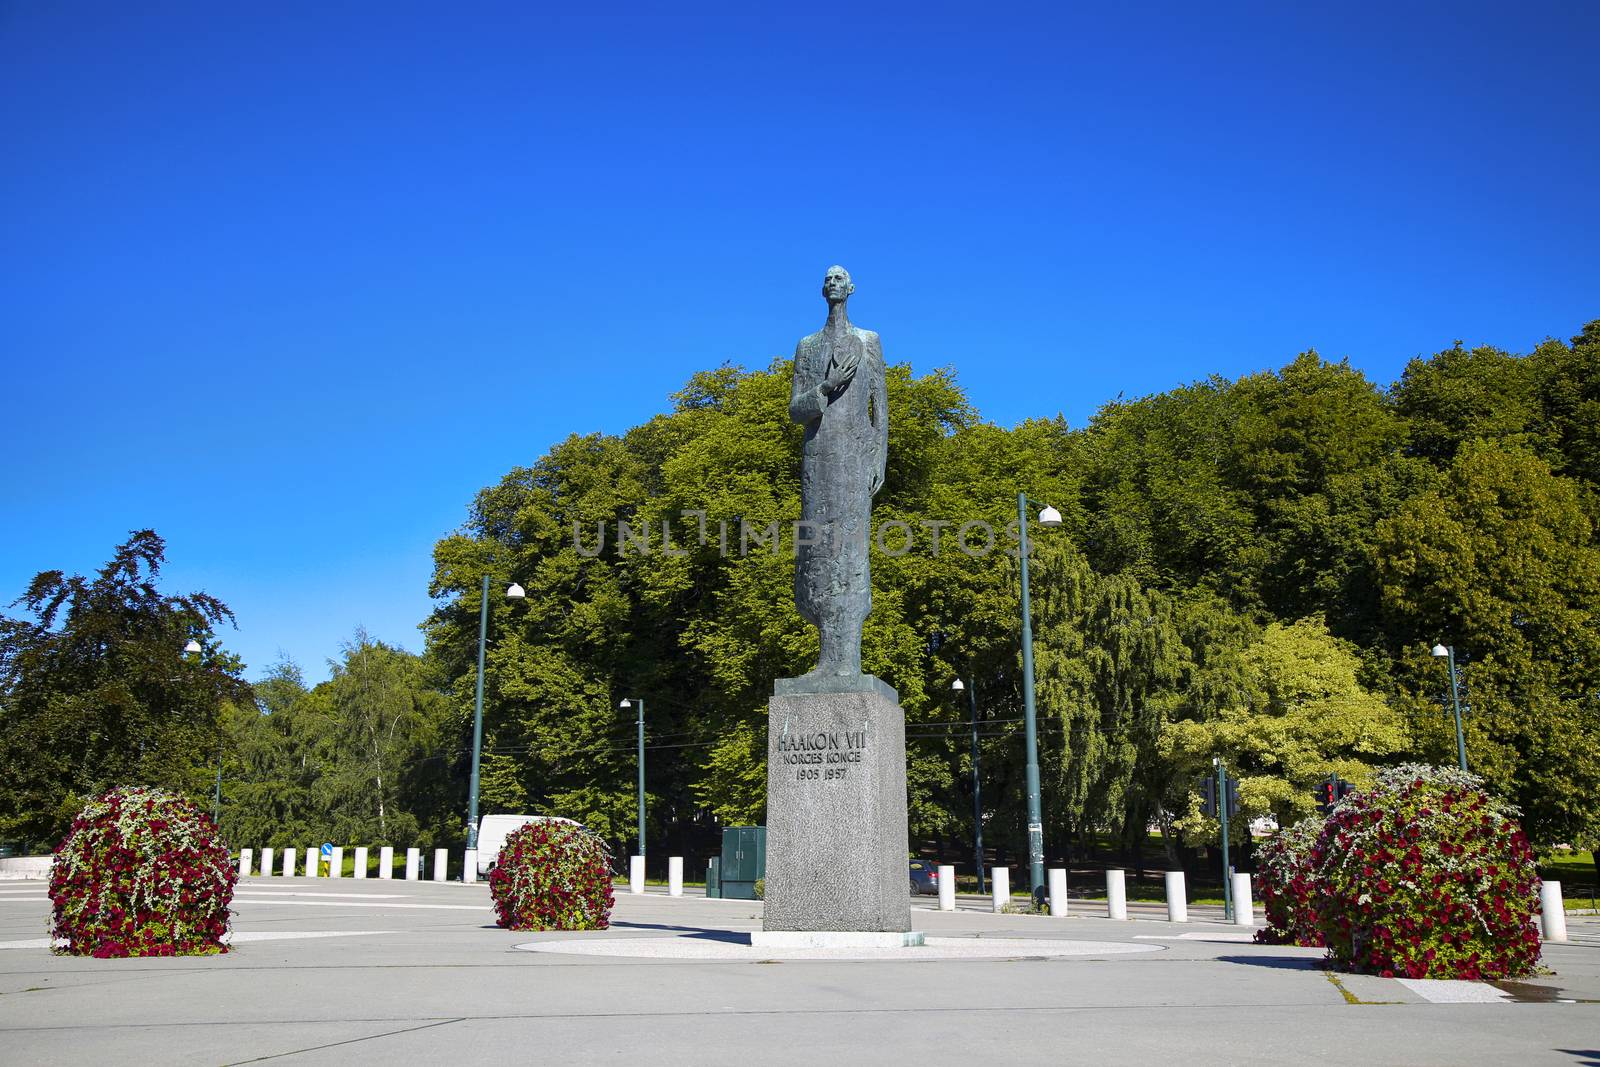 OSLO, NORWAY – AUGUST 17, 2016: Statue of King Haakon VII of Norway, Norges konge 1905 – 1957 located on Henrik Ibsens gate in Oslo, Norway on August 17,2016.